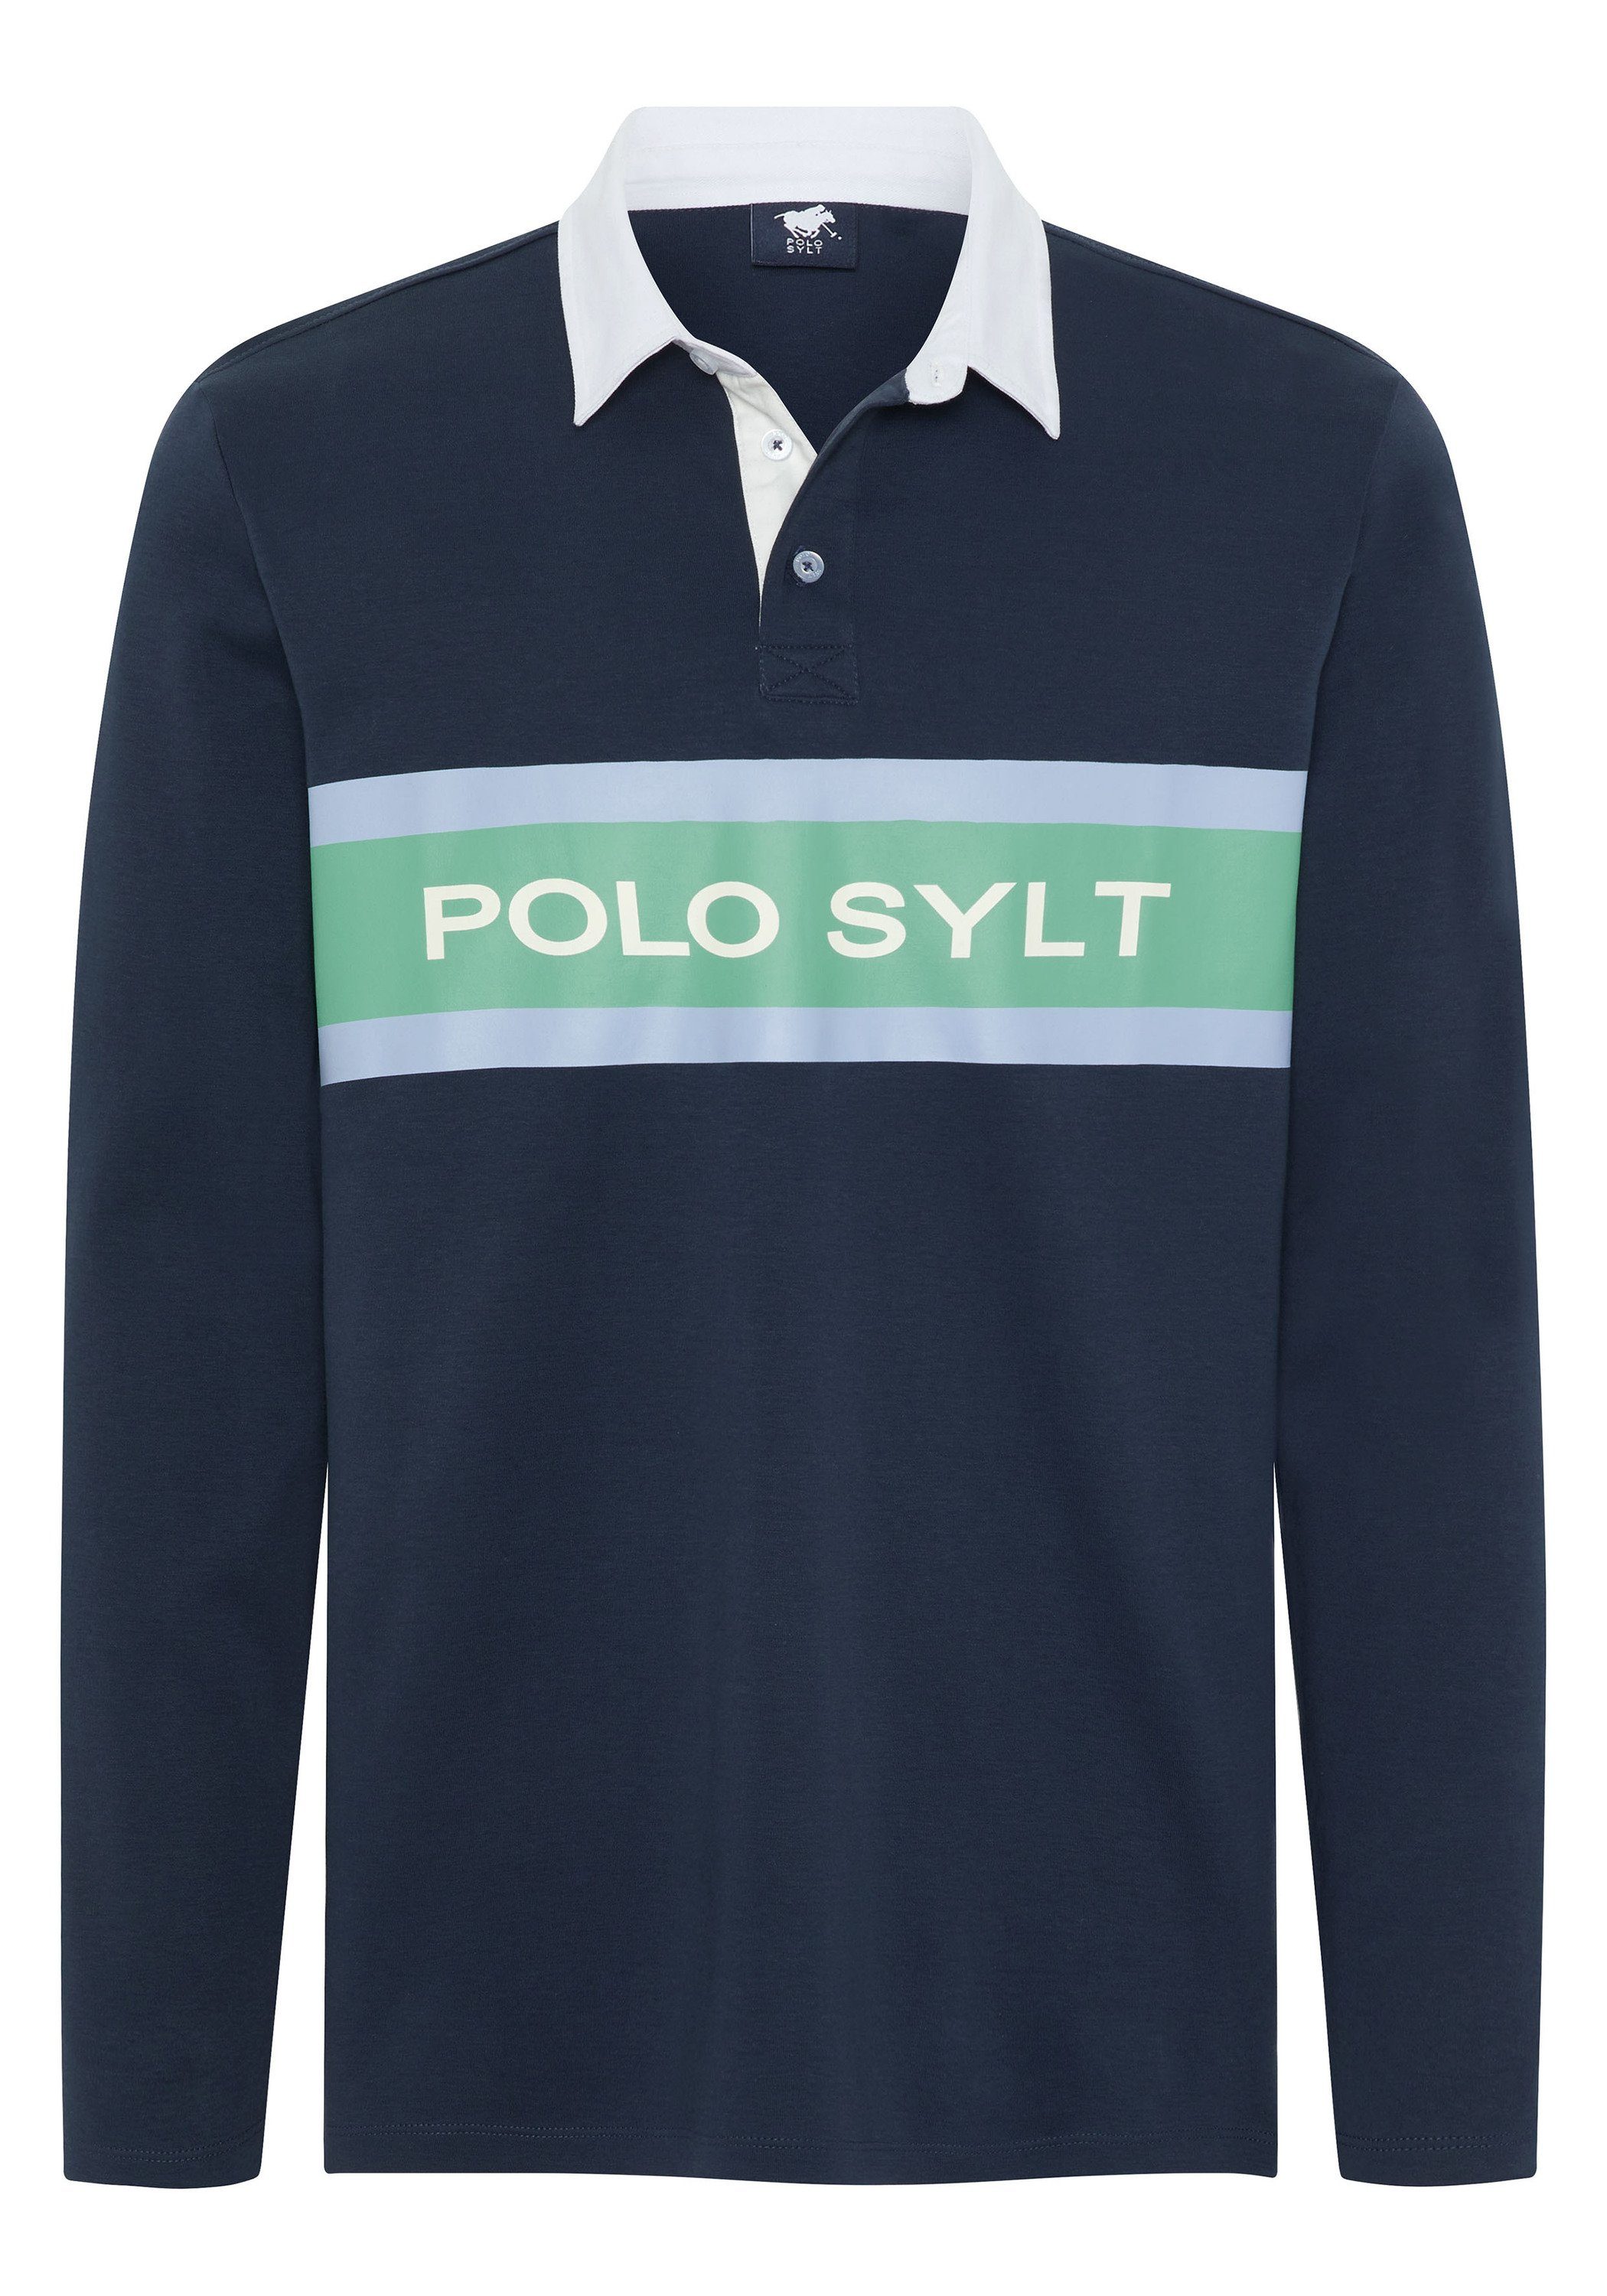 Polo Sylt Poloshirt im Label-Design Total 19-4010 Eclipse